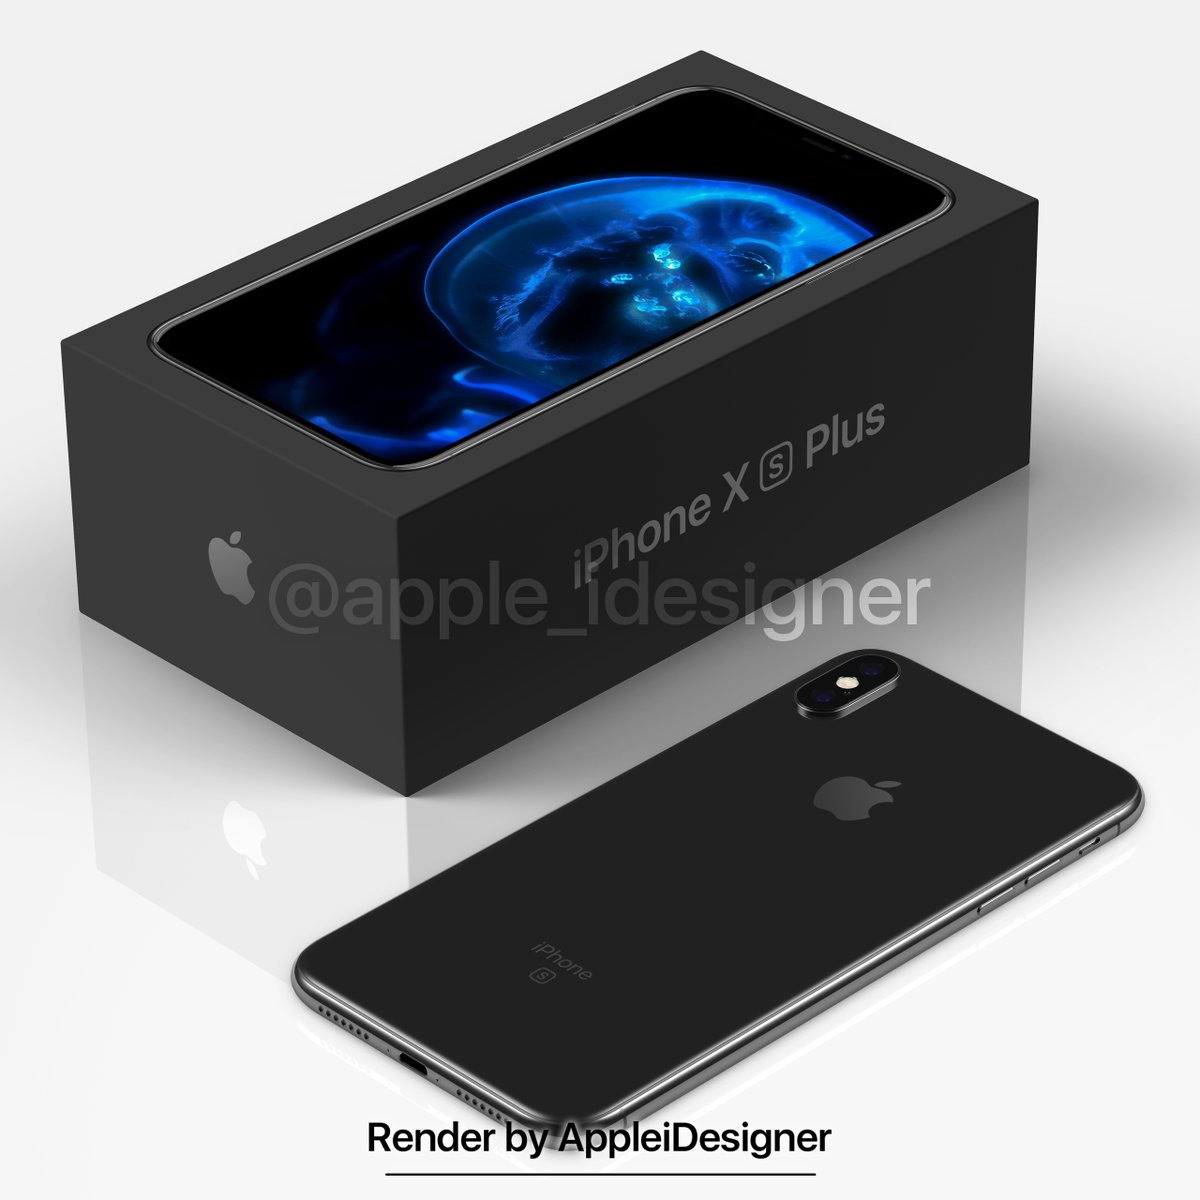 Iphone X Plus Render By Appleidesigner 2